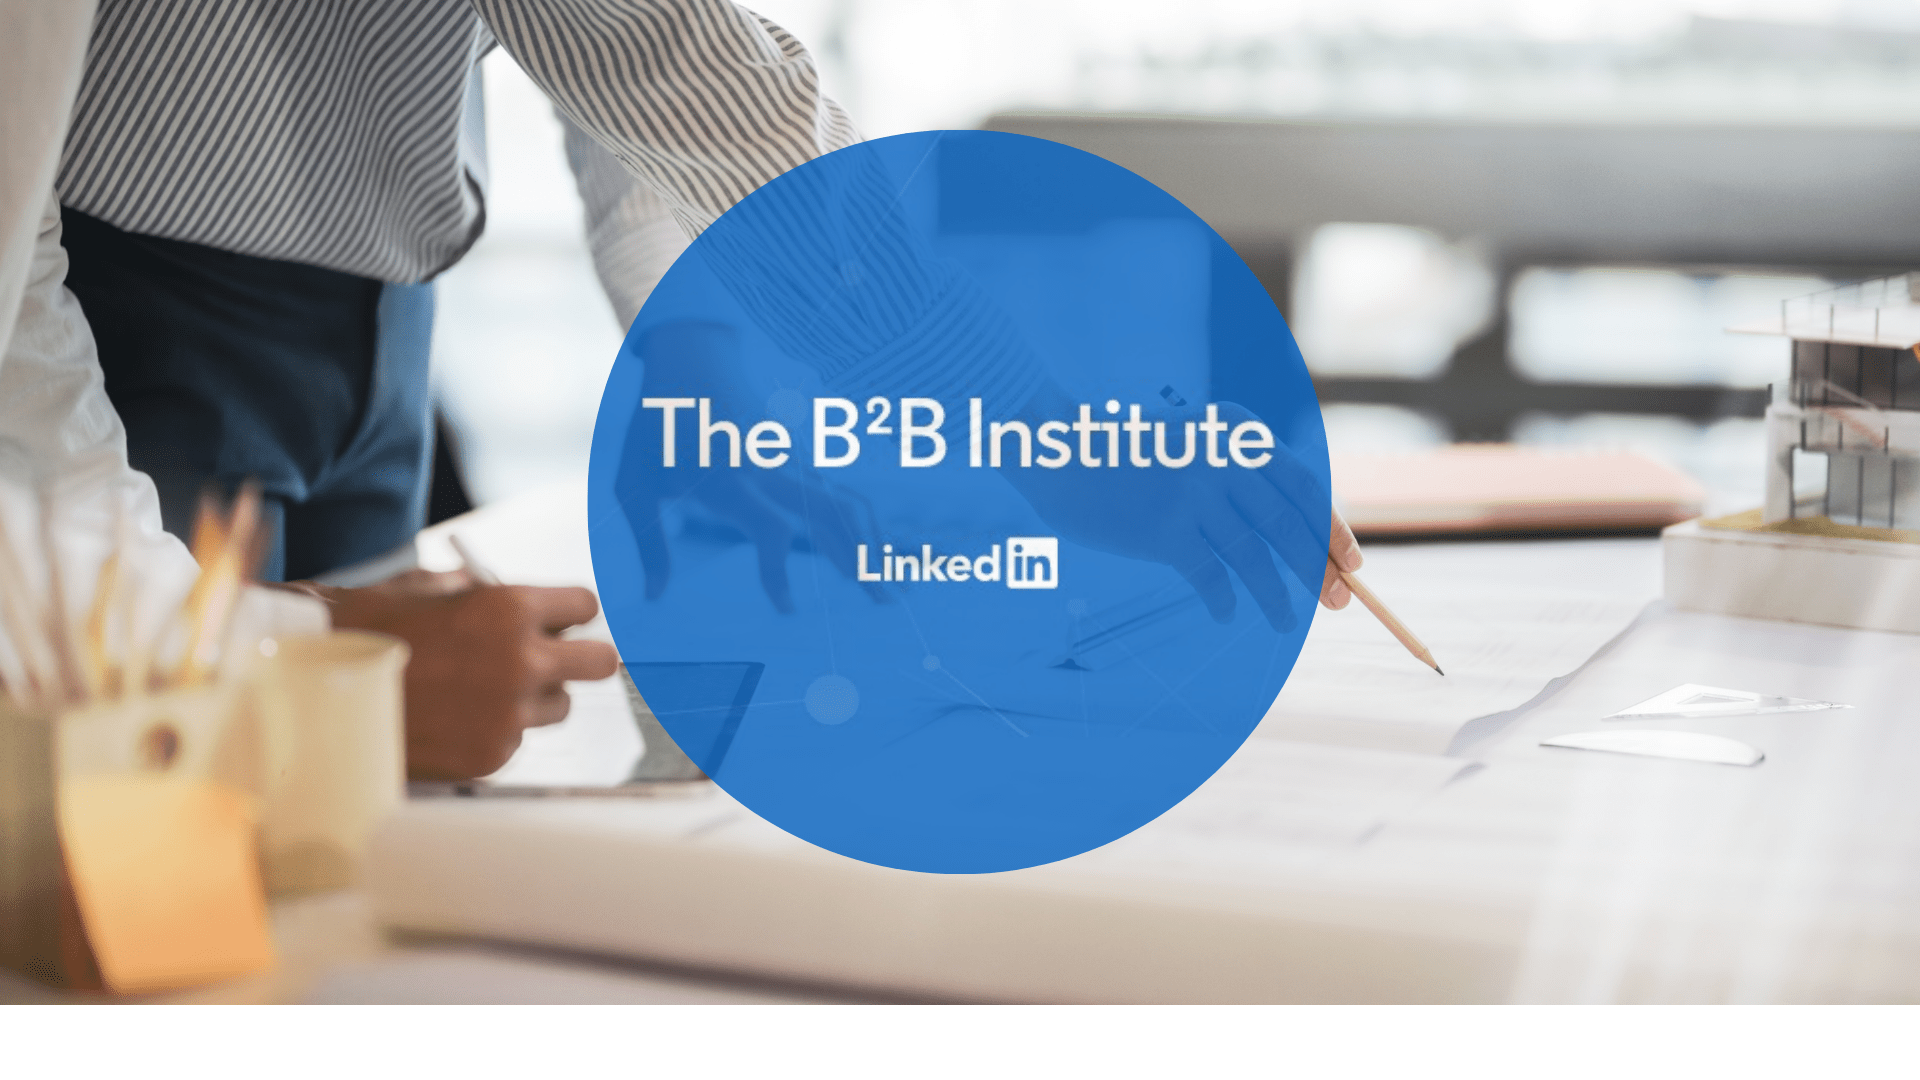 LinkedIn B2B Institute Brand Building